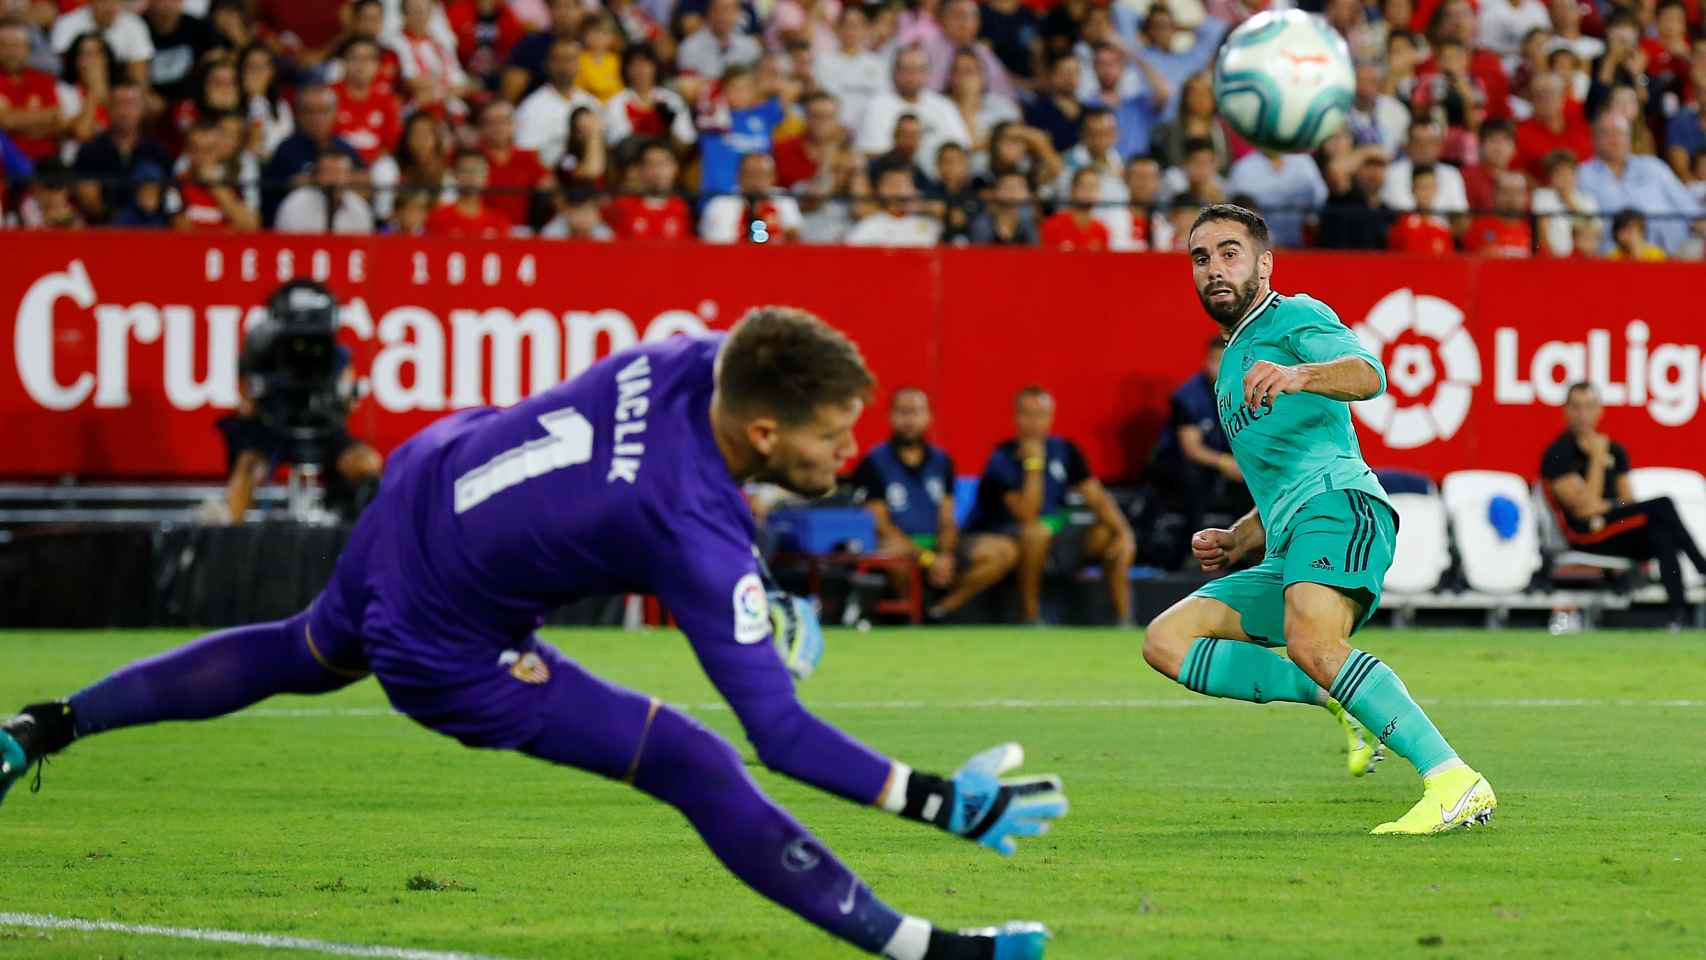 Vaclik detiene el tiro de Dani Carvajal, en el Sevilla - Real Madrid